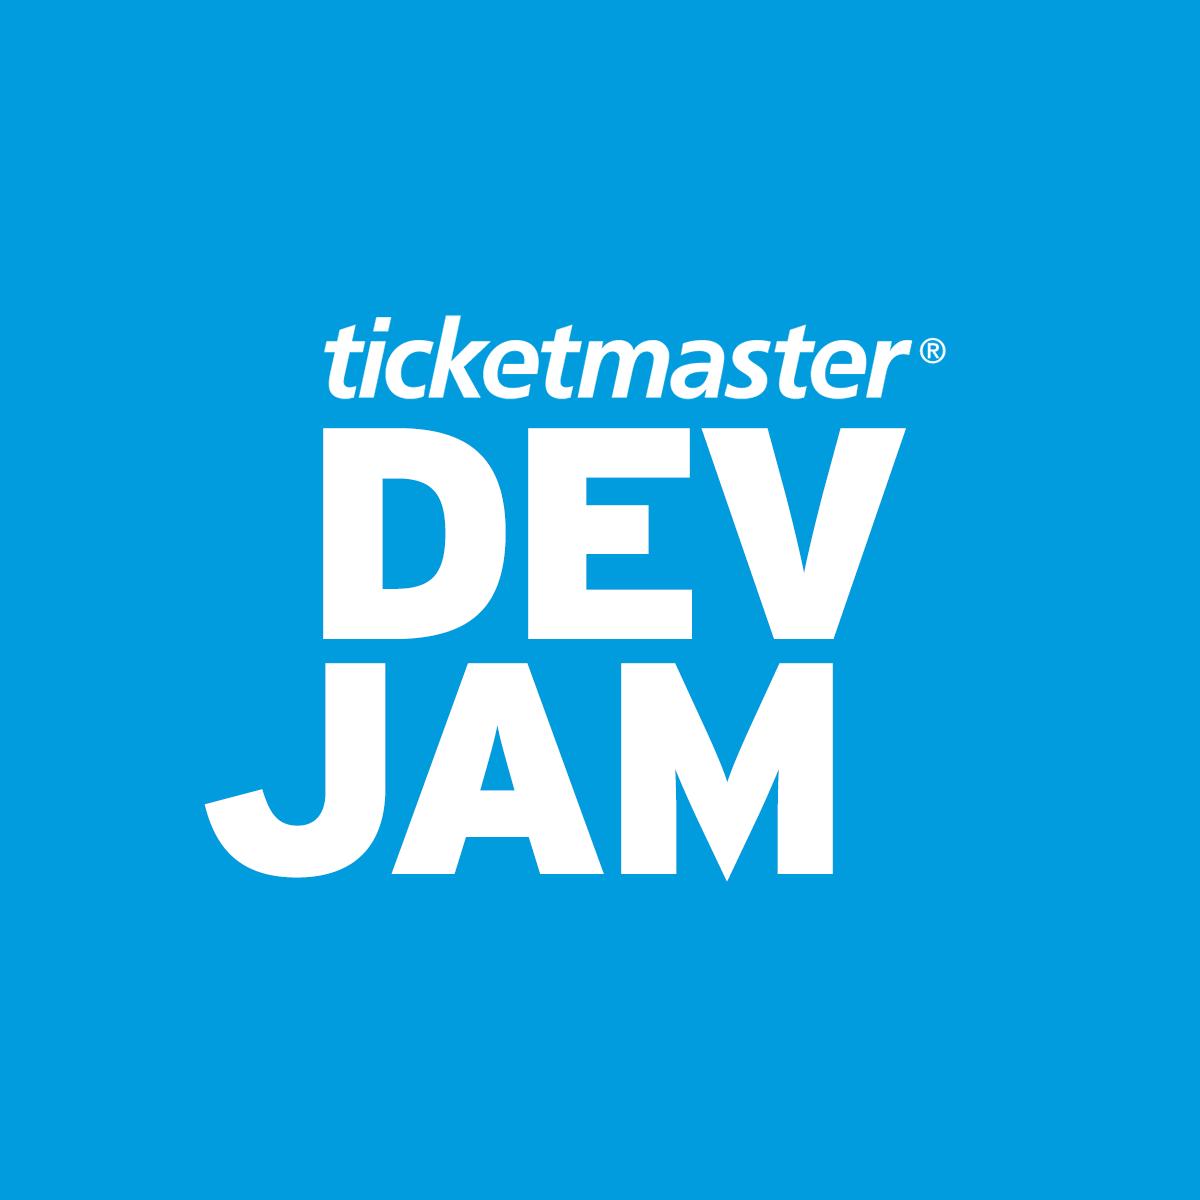 The Ticketmaster API Devjam in London, UK! Events Universe